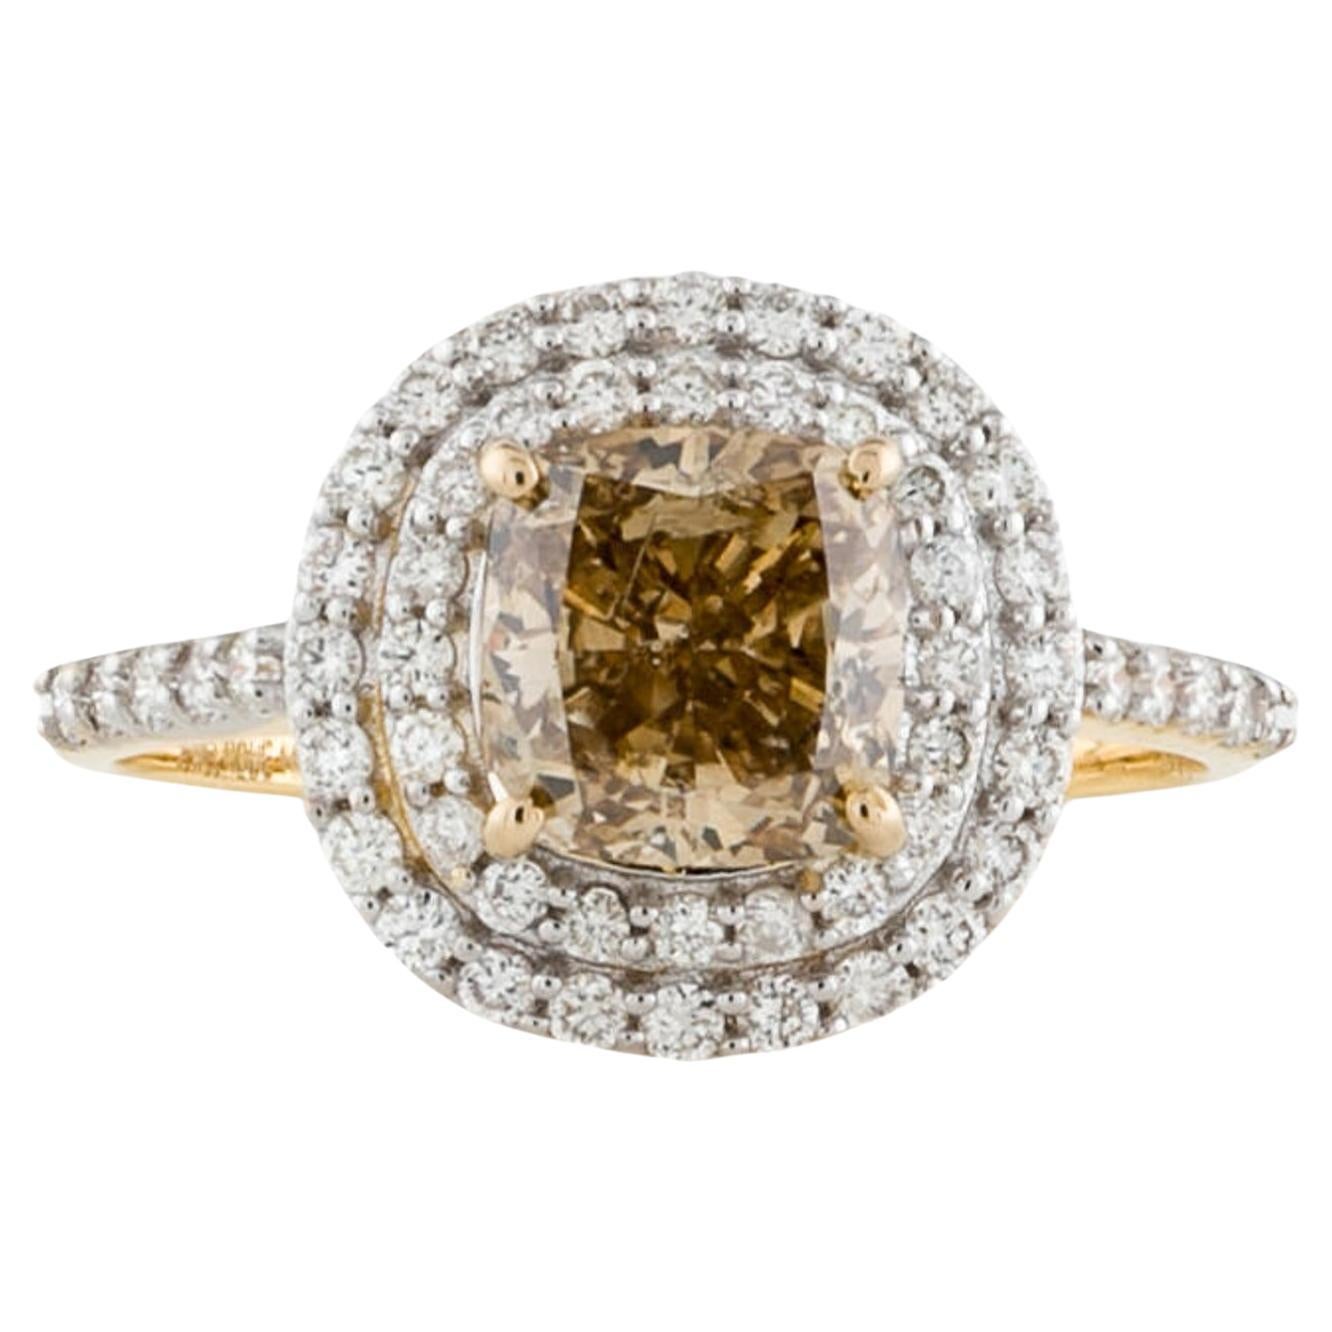 Elegant 2.15ct Diamond Engagement Ring, Size 7.25 - Statement Jewelry Piece